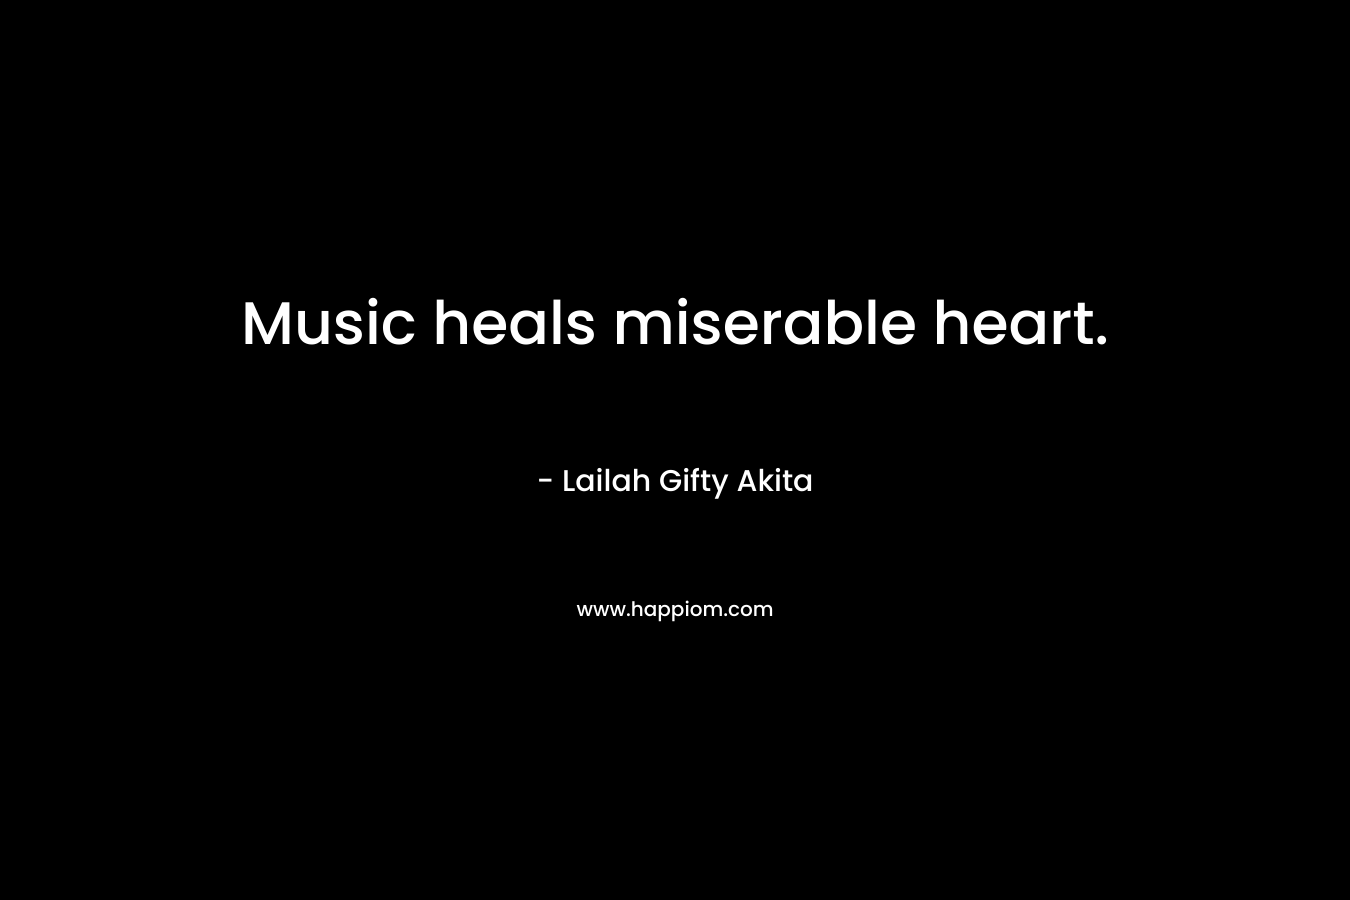 Music heals miserable heart.